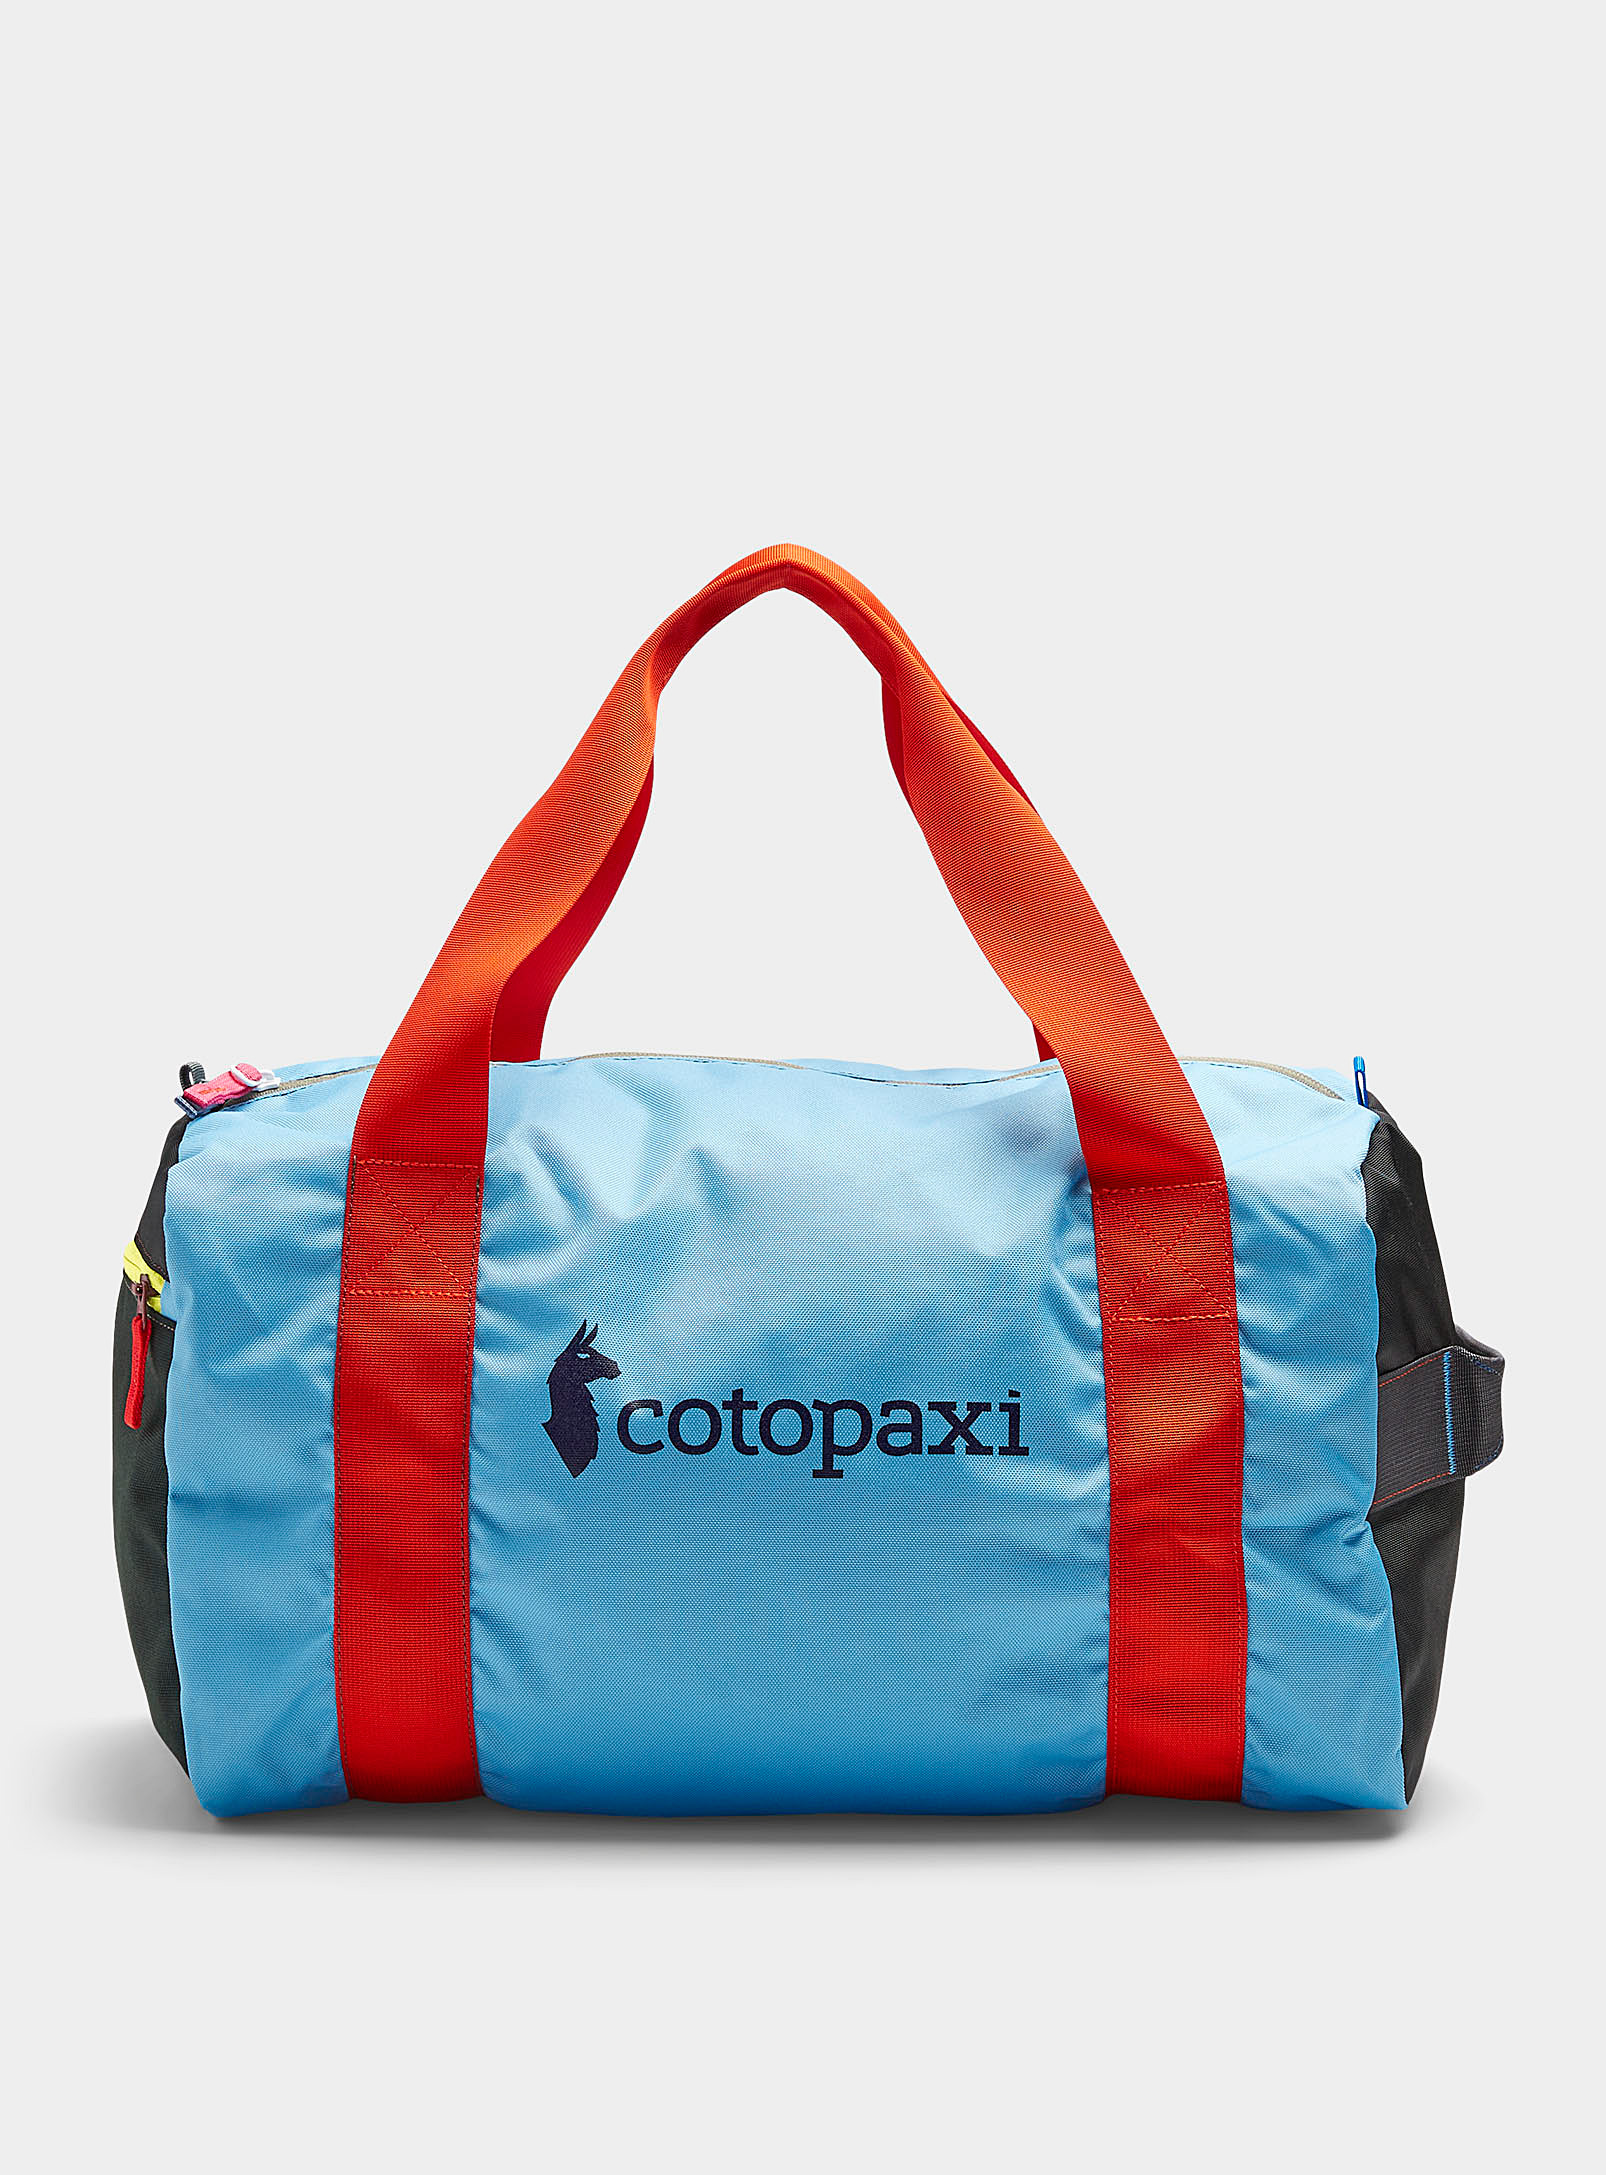 Cotopaxi - Women's Mariveles 32 L duffle bag